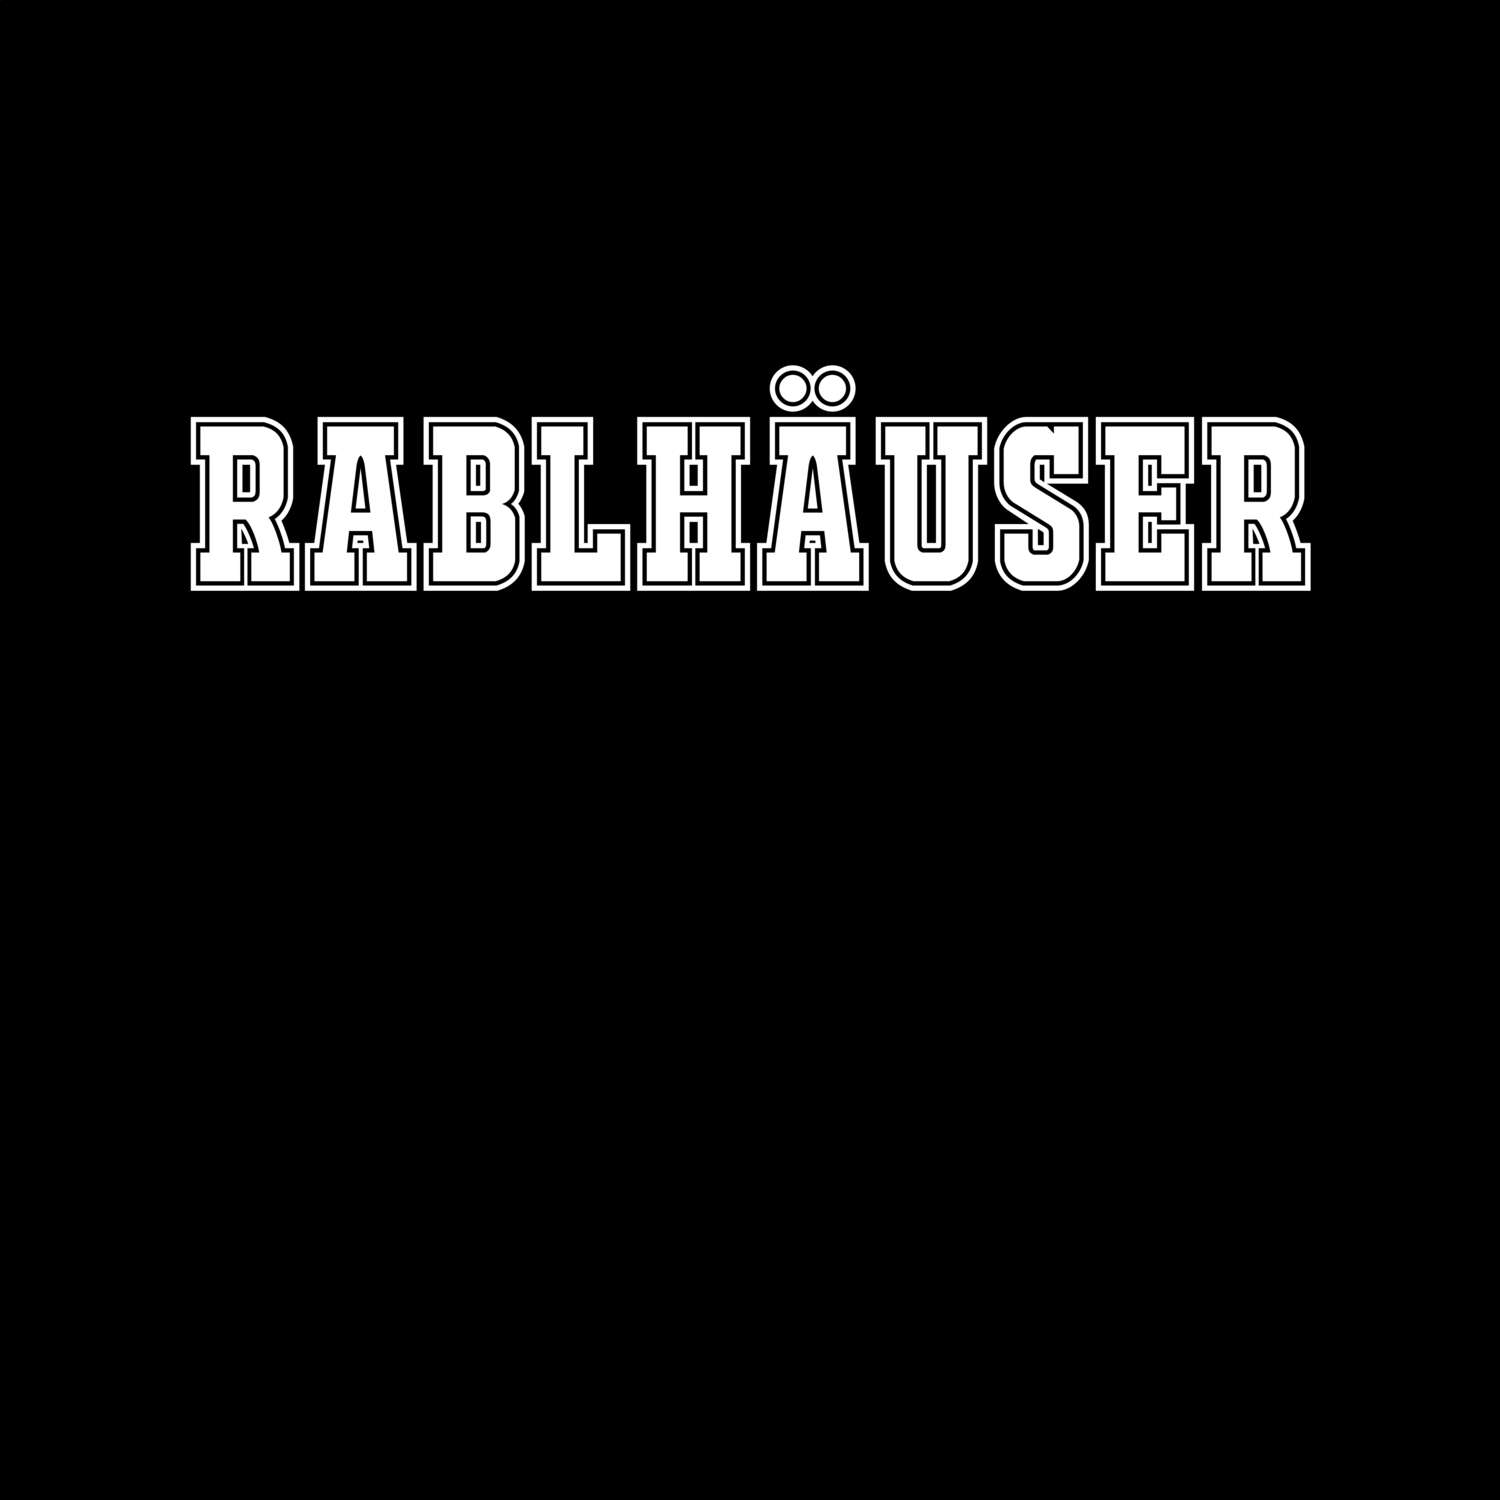 Rablhäuser T-Shirt »Classic«